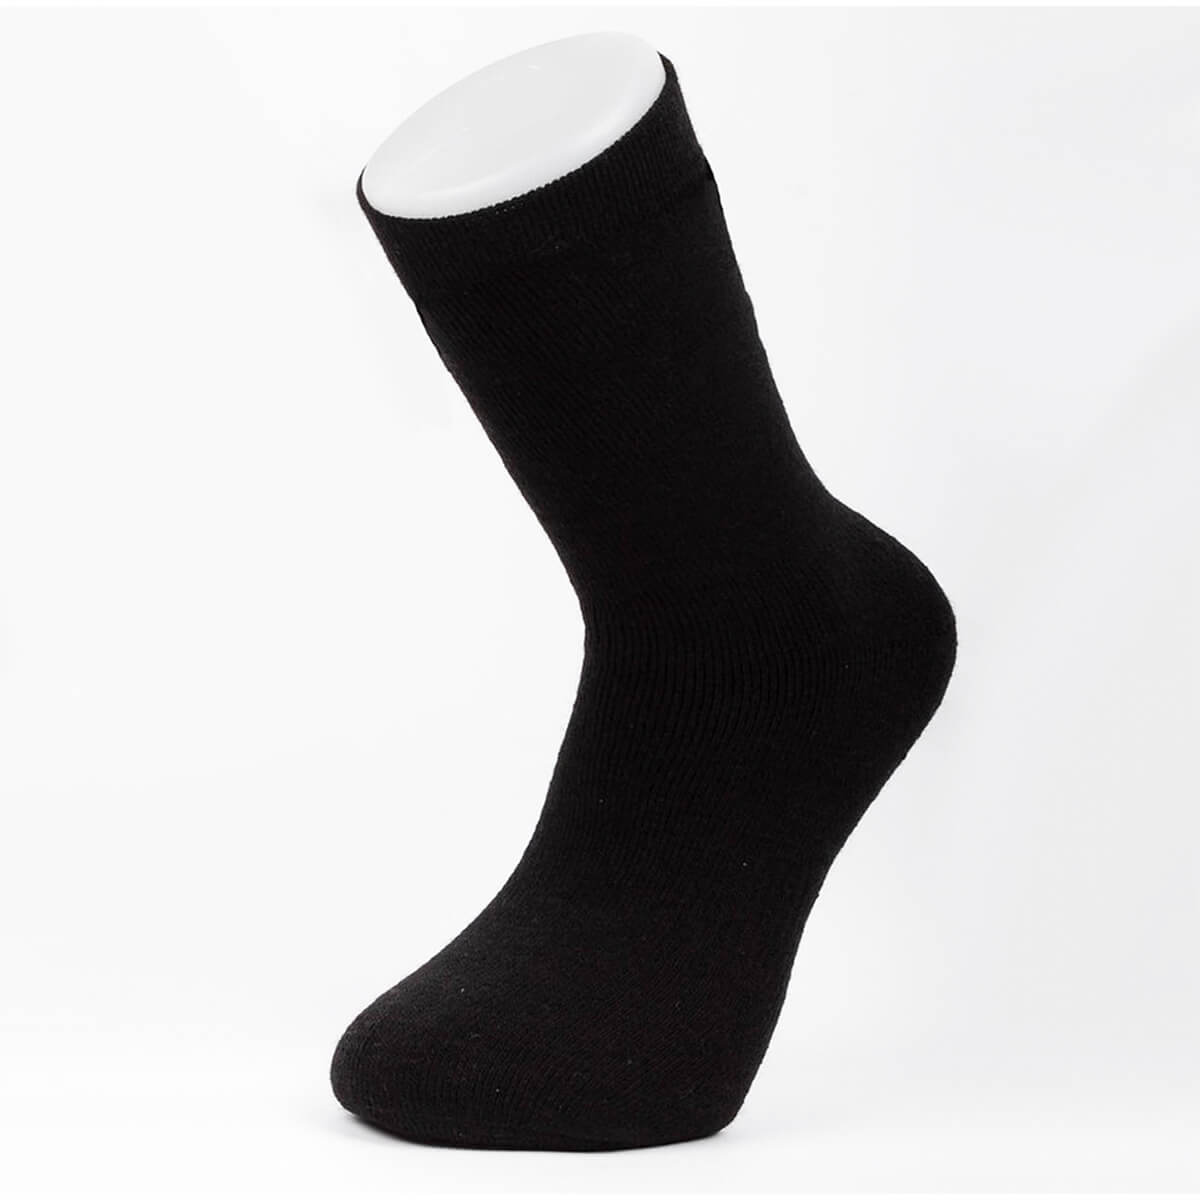 Feeet The Boot Woolen Sock - John Bull Clothing